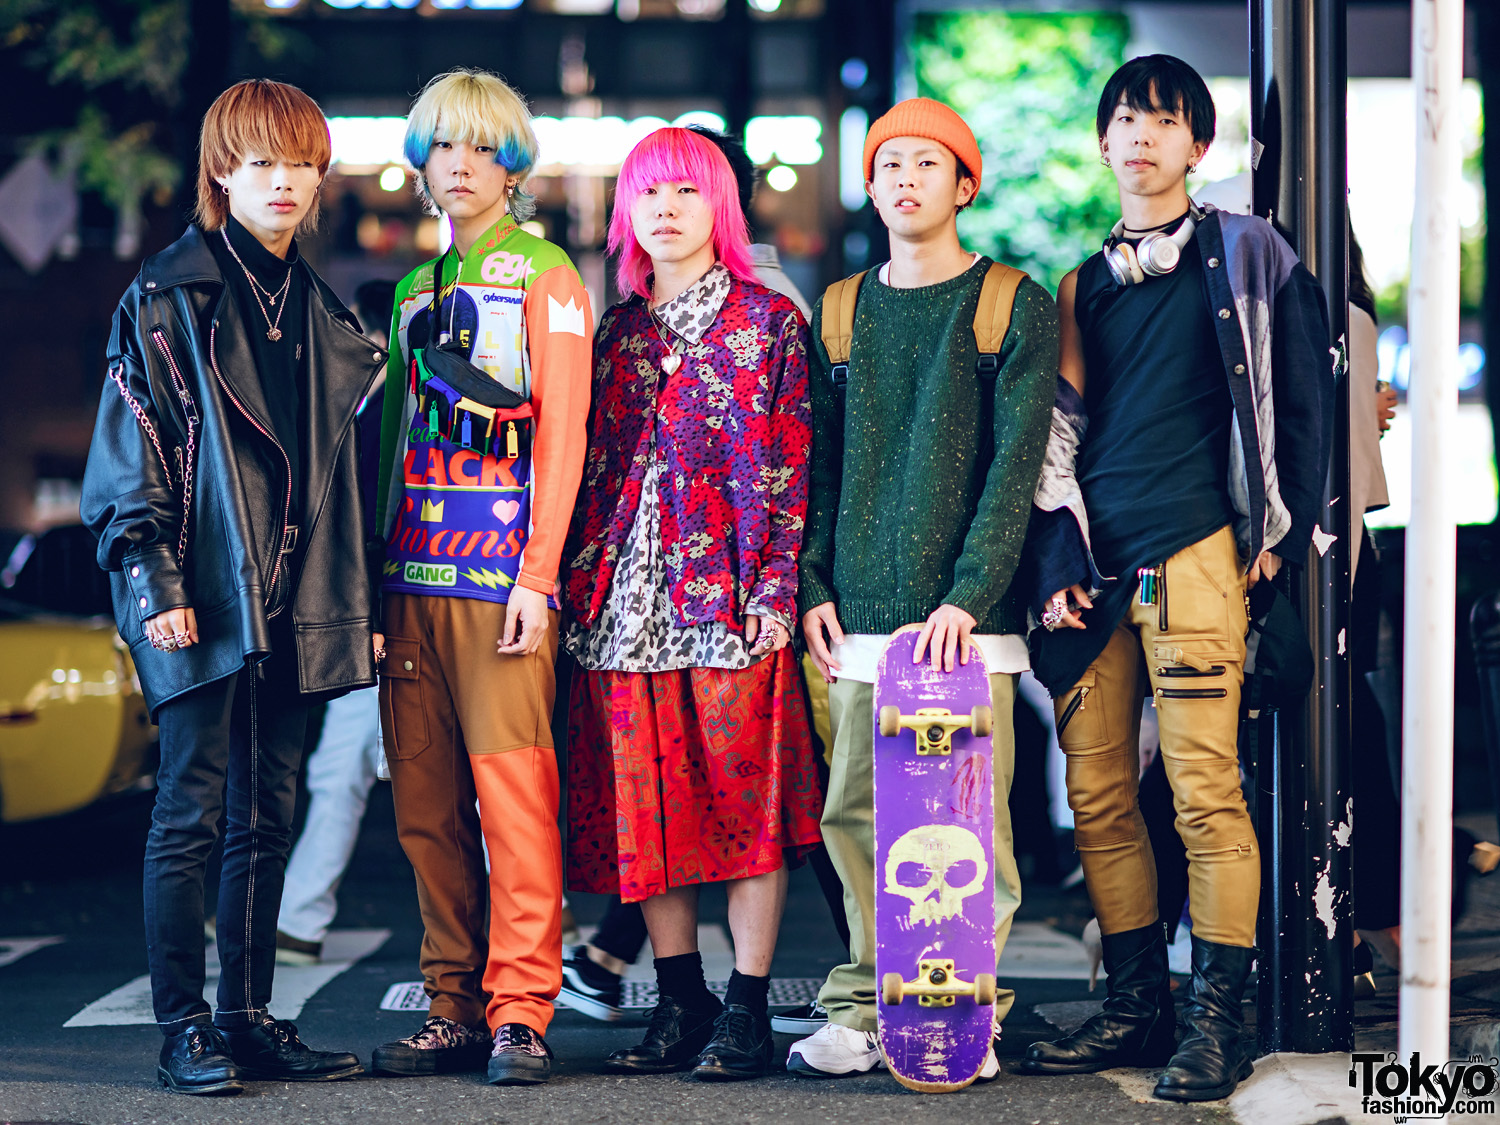 Tokyo Style Tribe w/ Pink Hair, MISBHV Leather Jacket, W< Sweatshirt, Saint Laurent Skirt, Carhartt Backpack & BlackMeans Pleather Pants